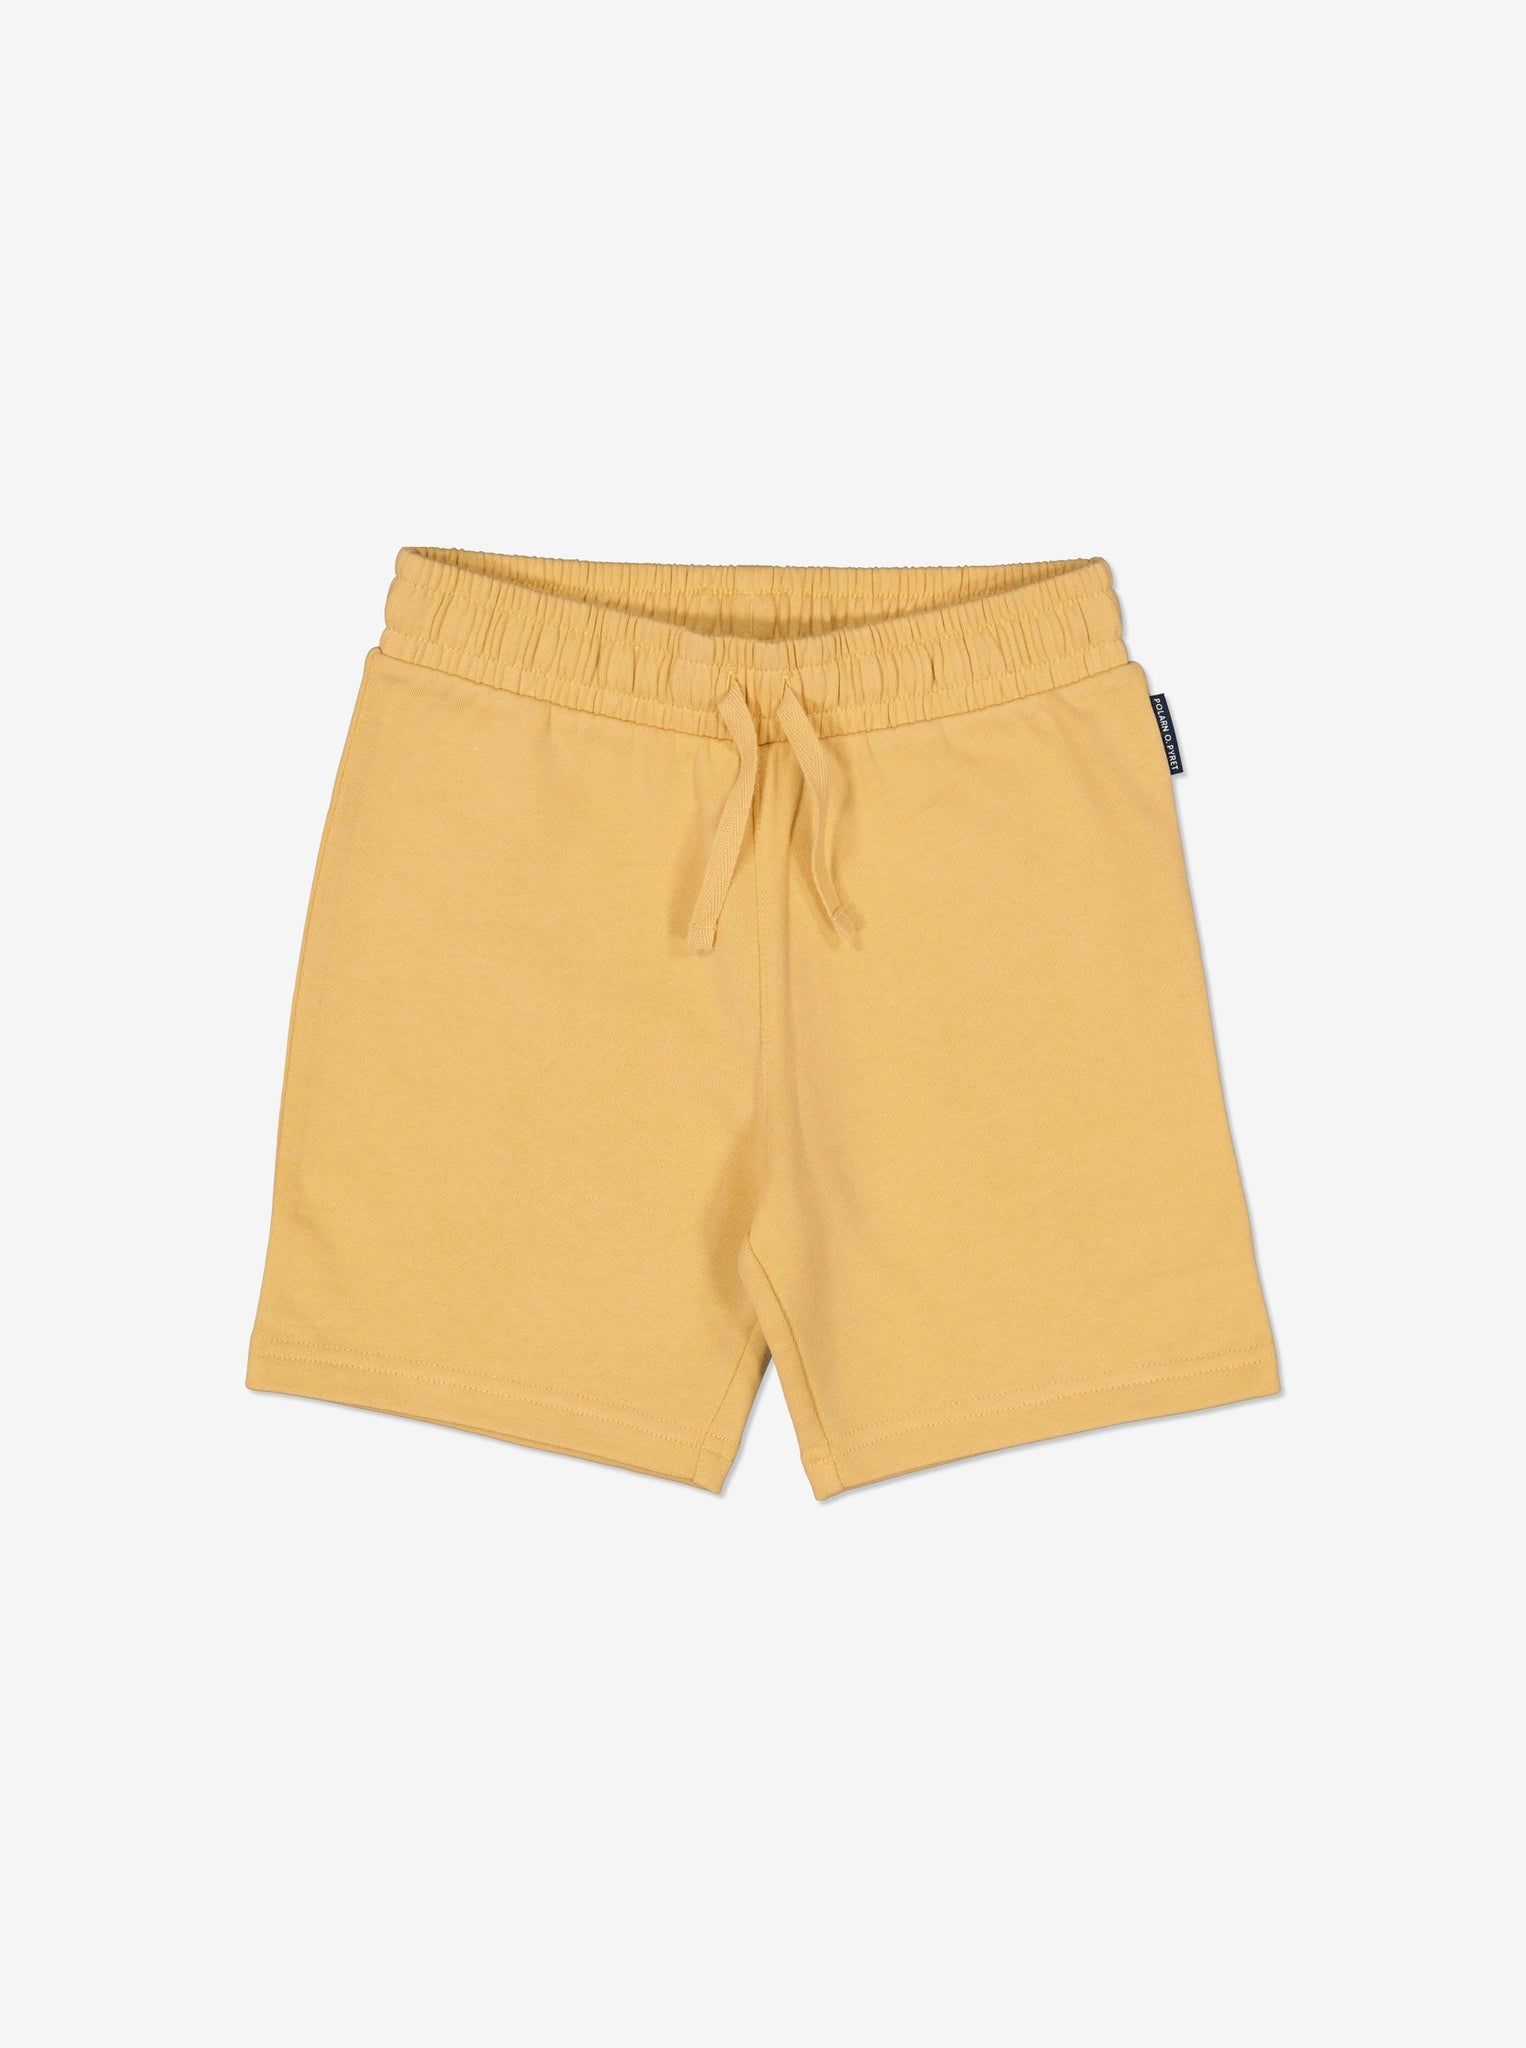 Organic Cotton Yellow Kids Shorts from Polarn O. Pyret Kidswear. Made from 100% GOTS Organic Cotton.